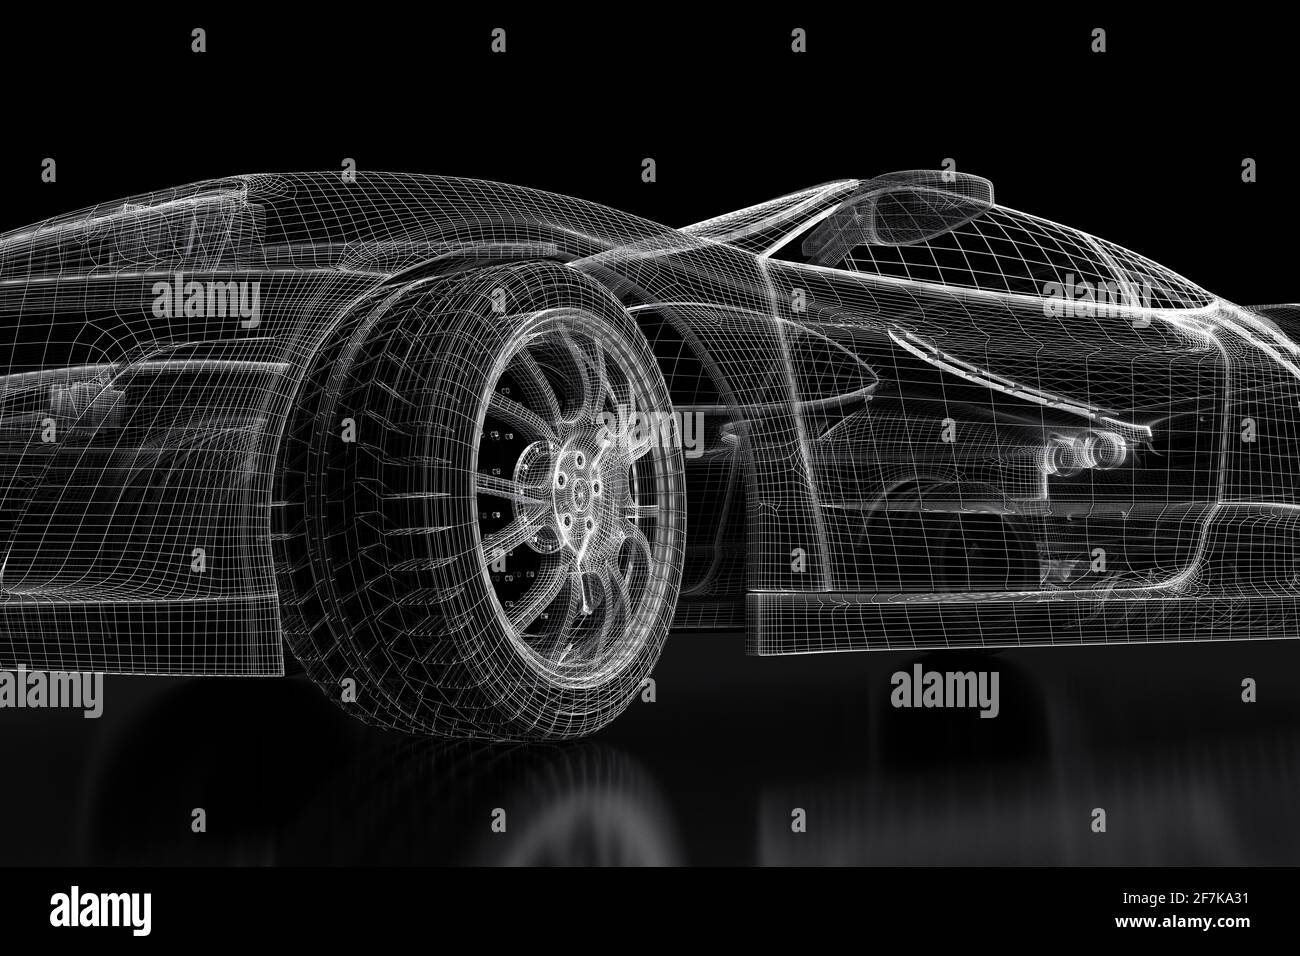 Car vehicle 3d blueprint model on a black background. 3d rendered image Stock Photo